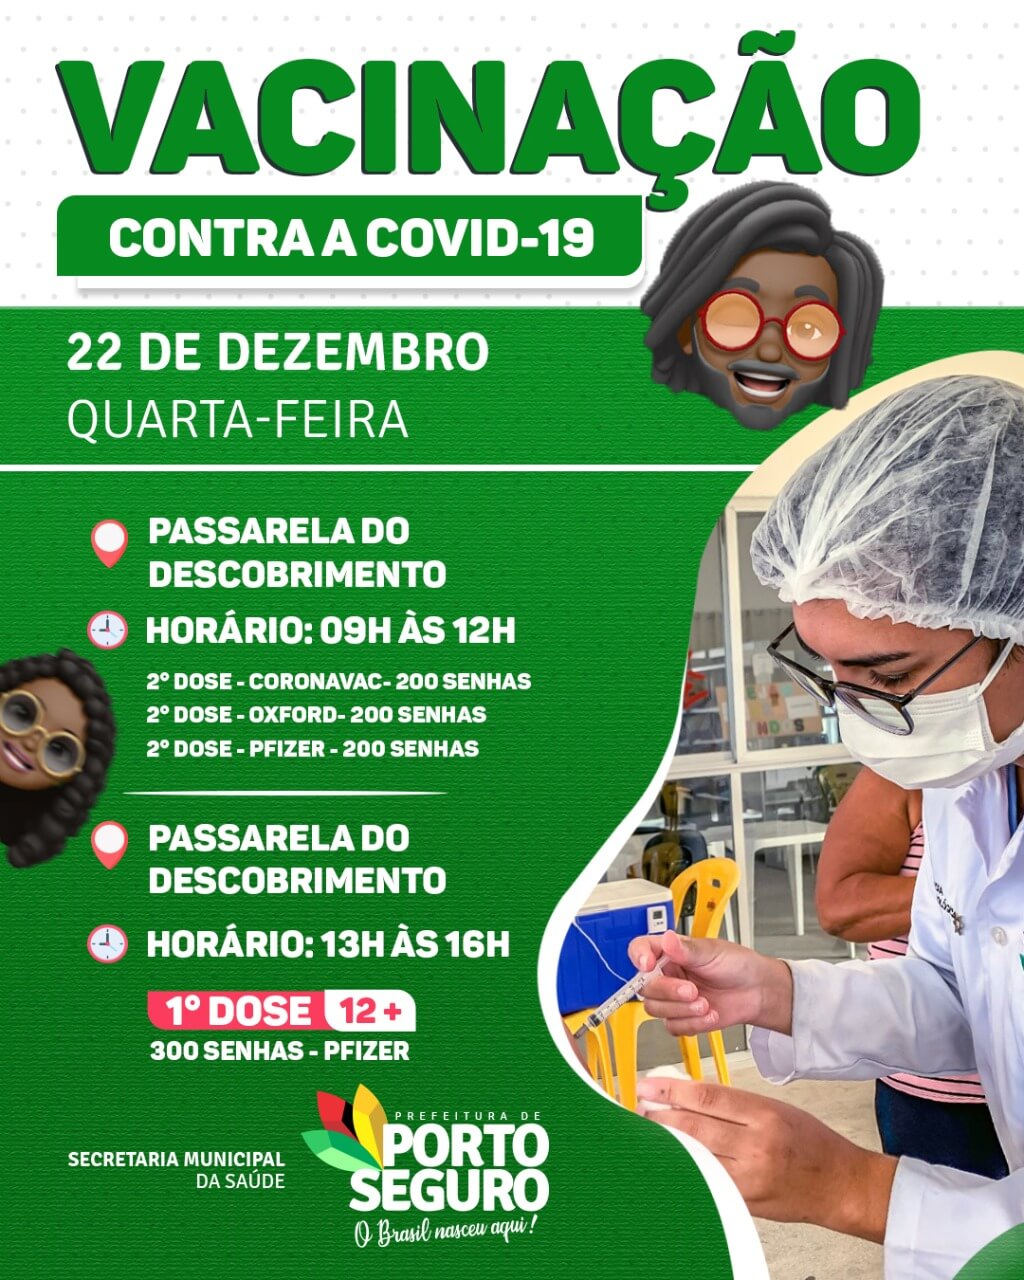 PORTO SEGURO: Vacina contra Covid-19 nesta Quarta-feira - 22 de dezembro 25